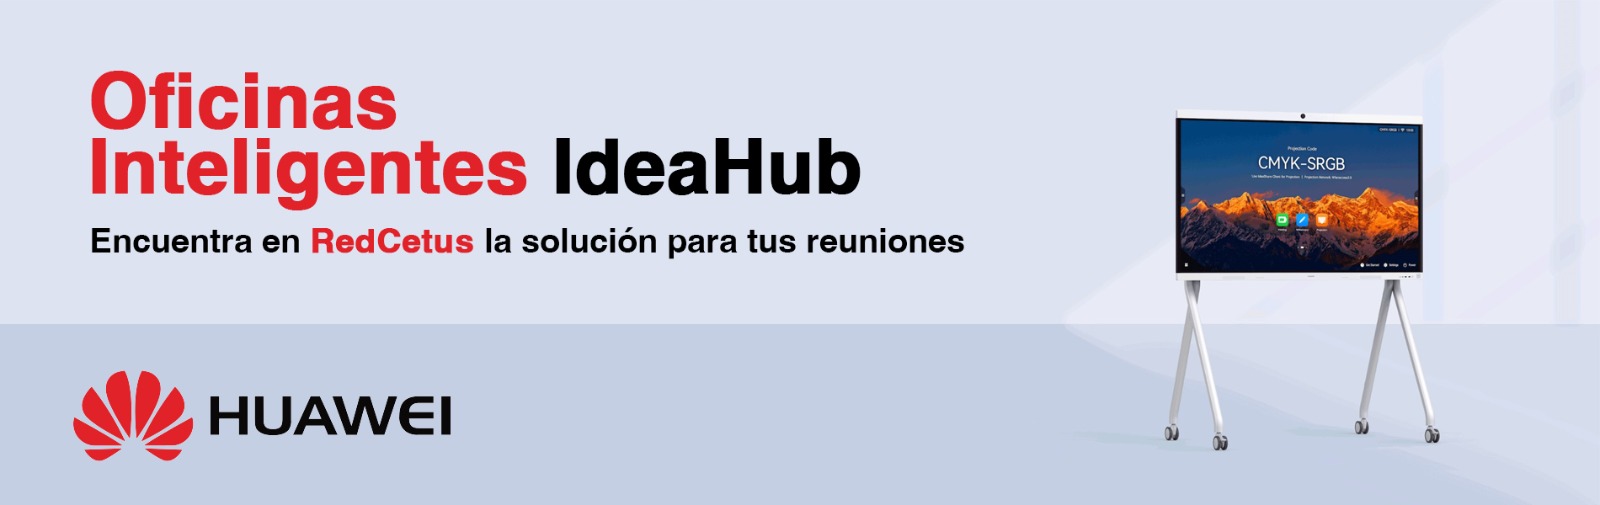 Huawei IdeaHub